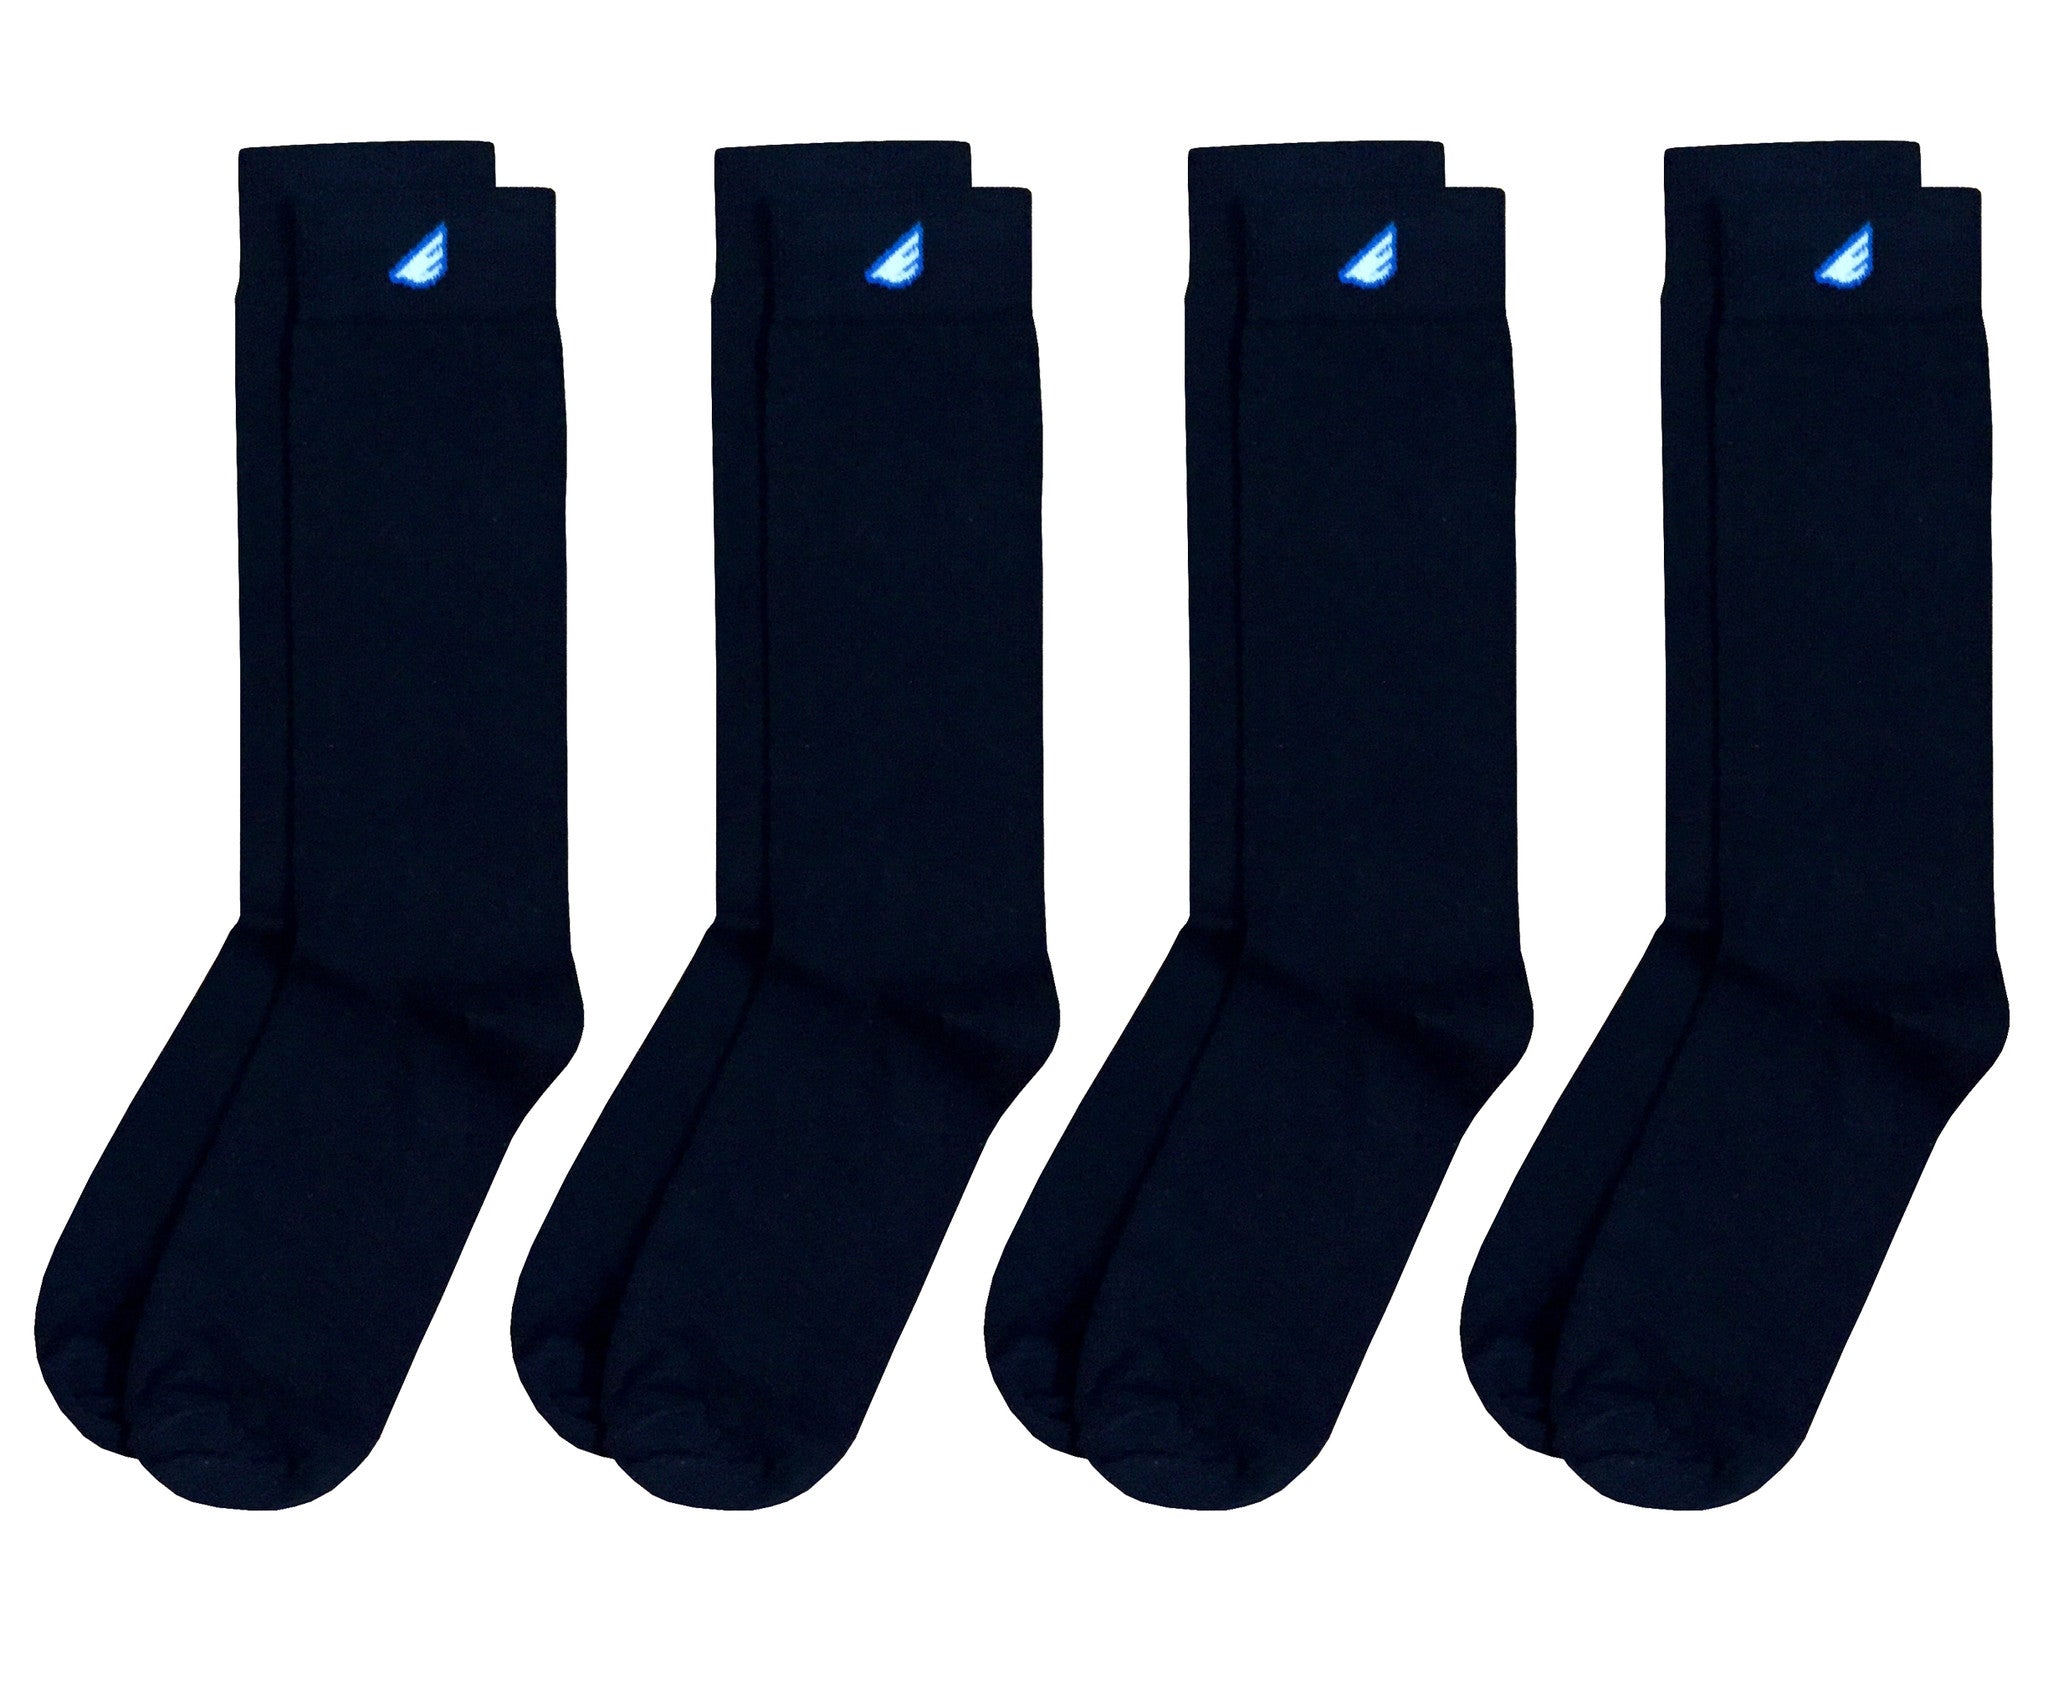 Mens Fun Colorful Digital Camo Supima Cotton USA-made Dress Socks 3-pack -  Boldfoot Socks